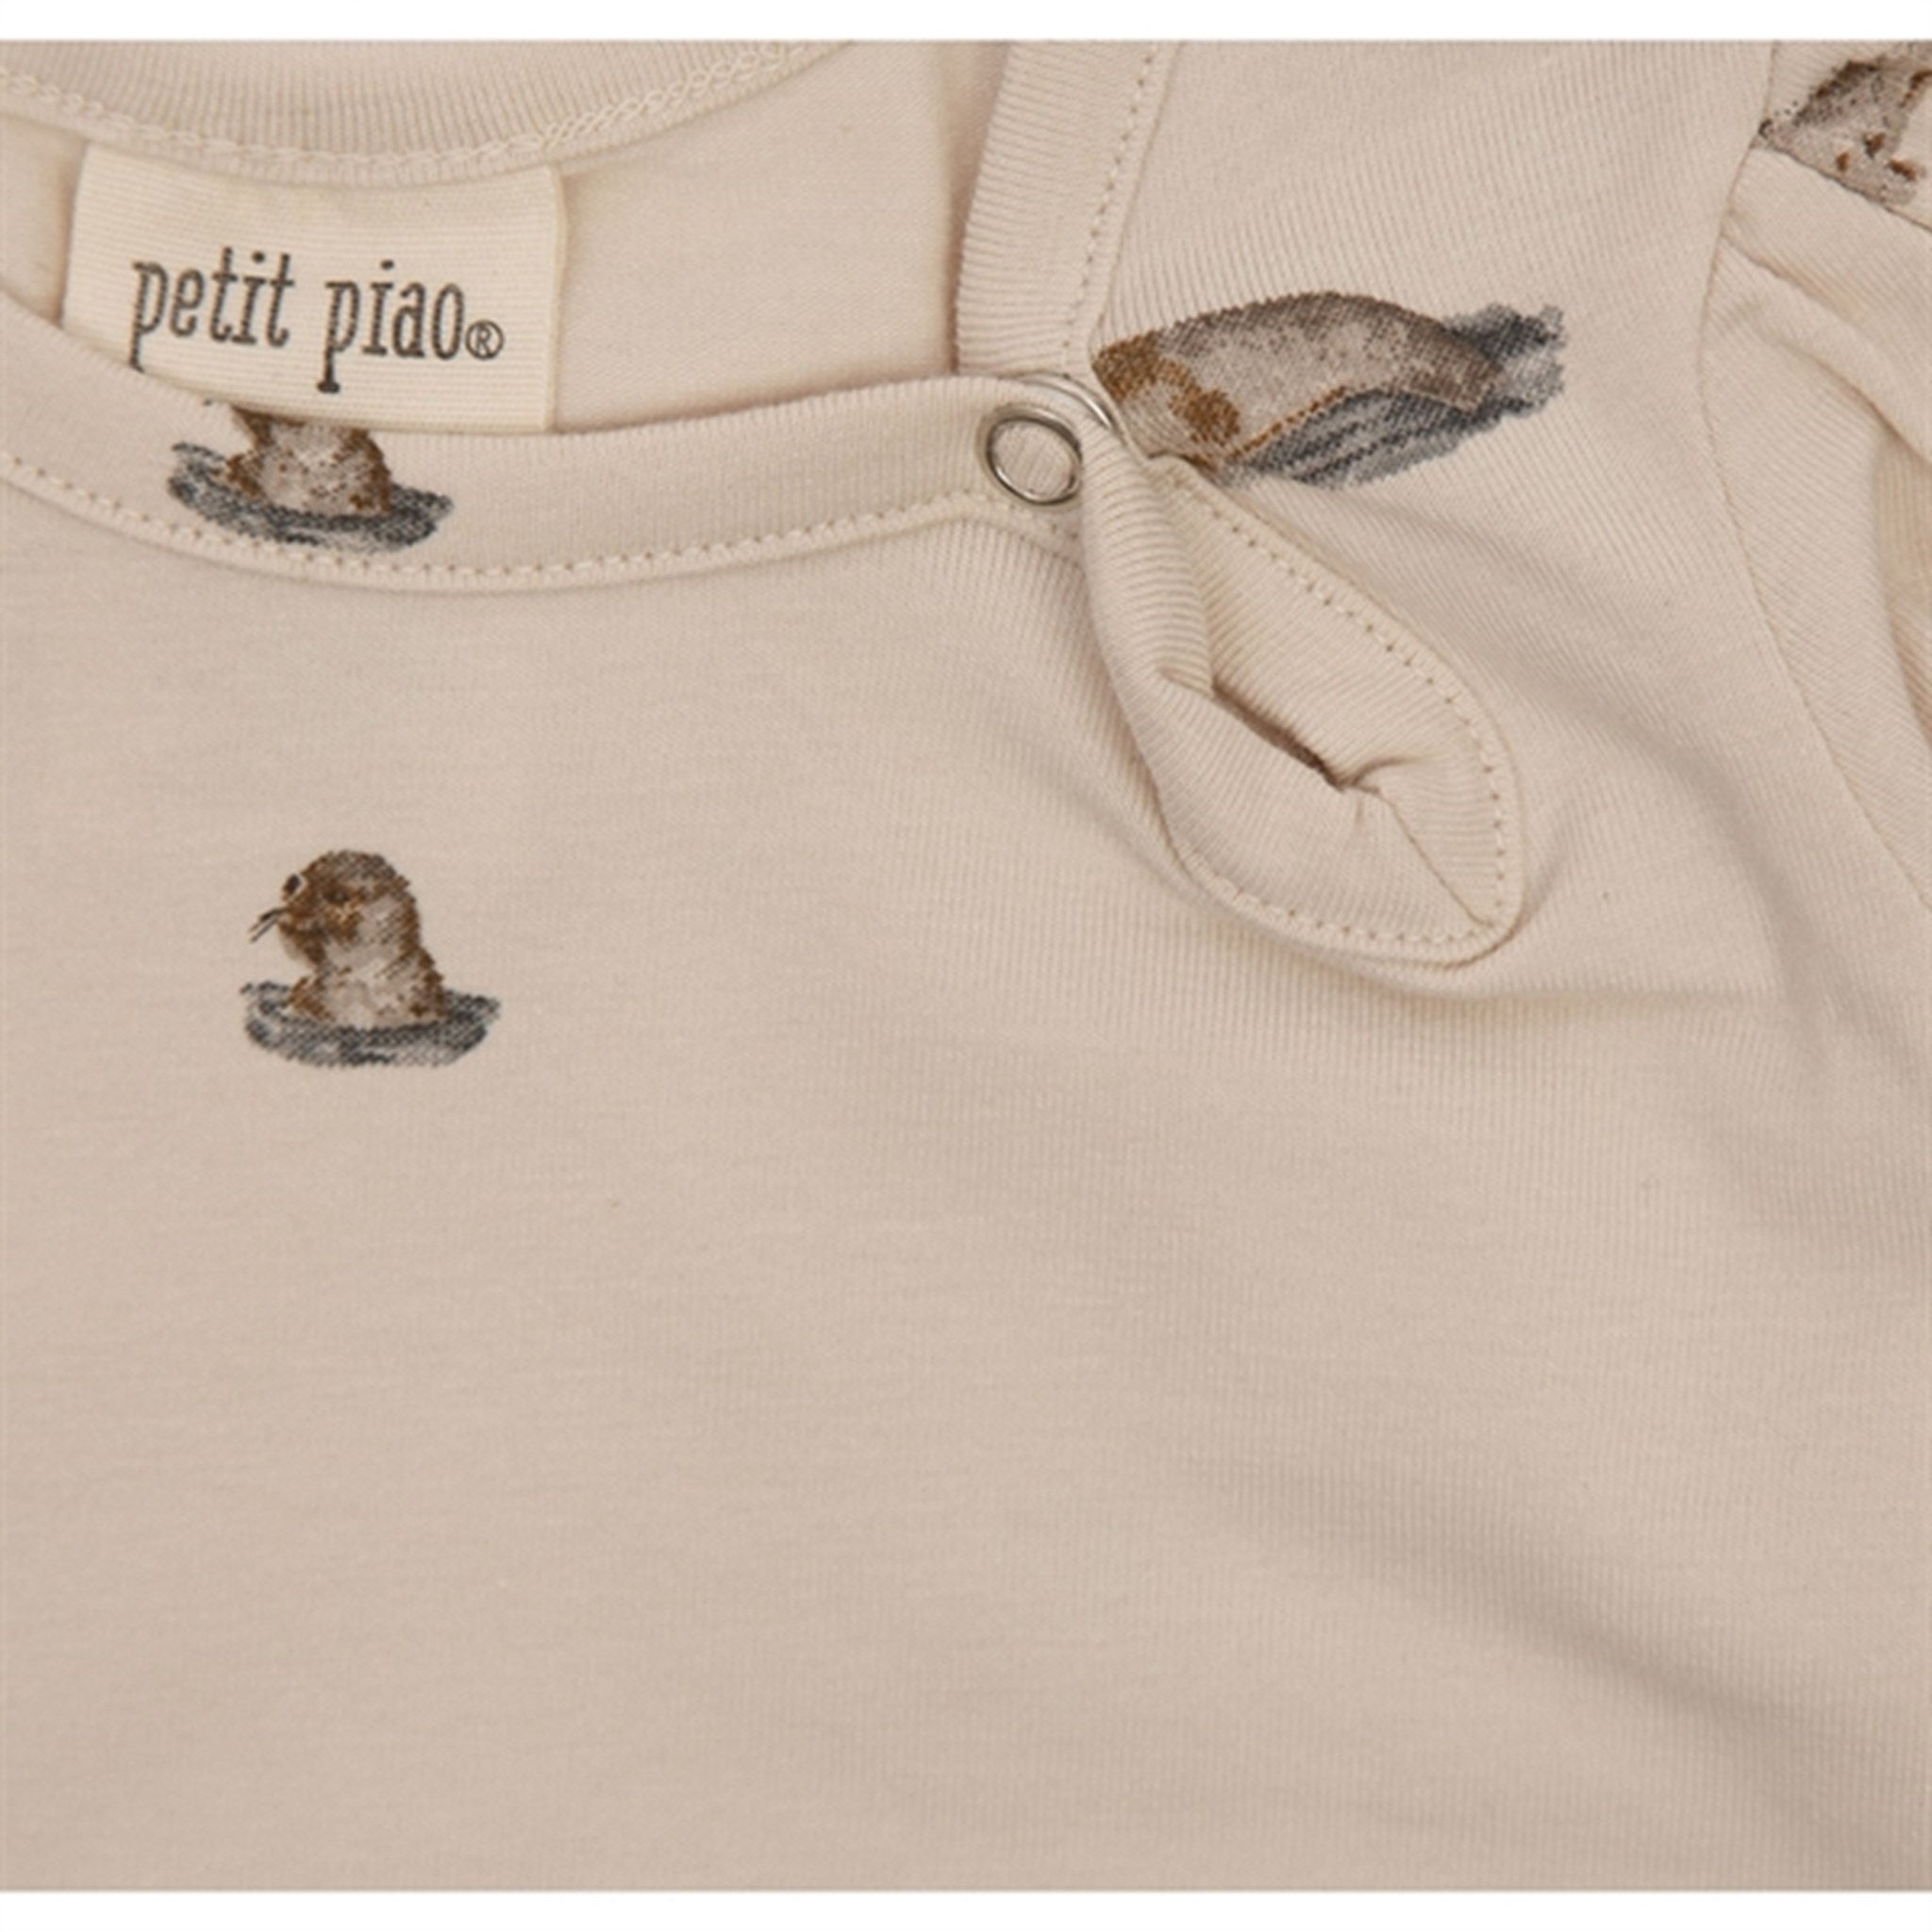 Petit Piao Seal Gather Printed Dress 2